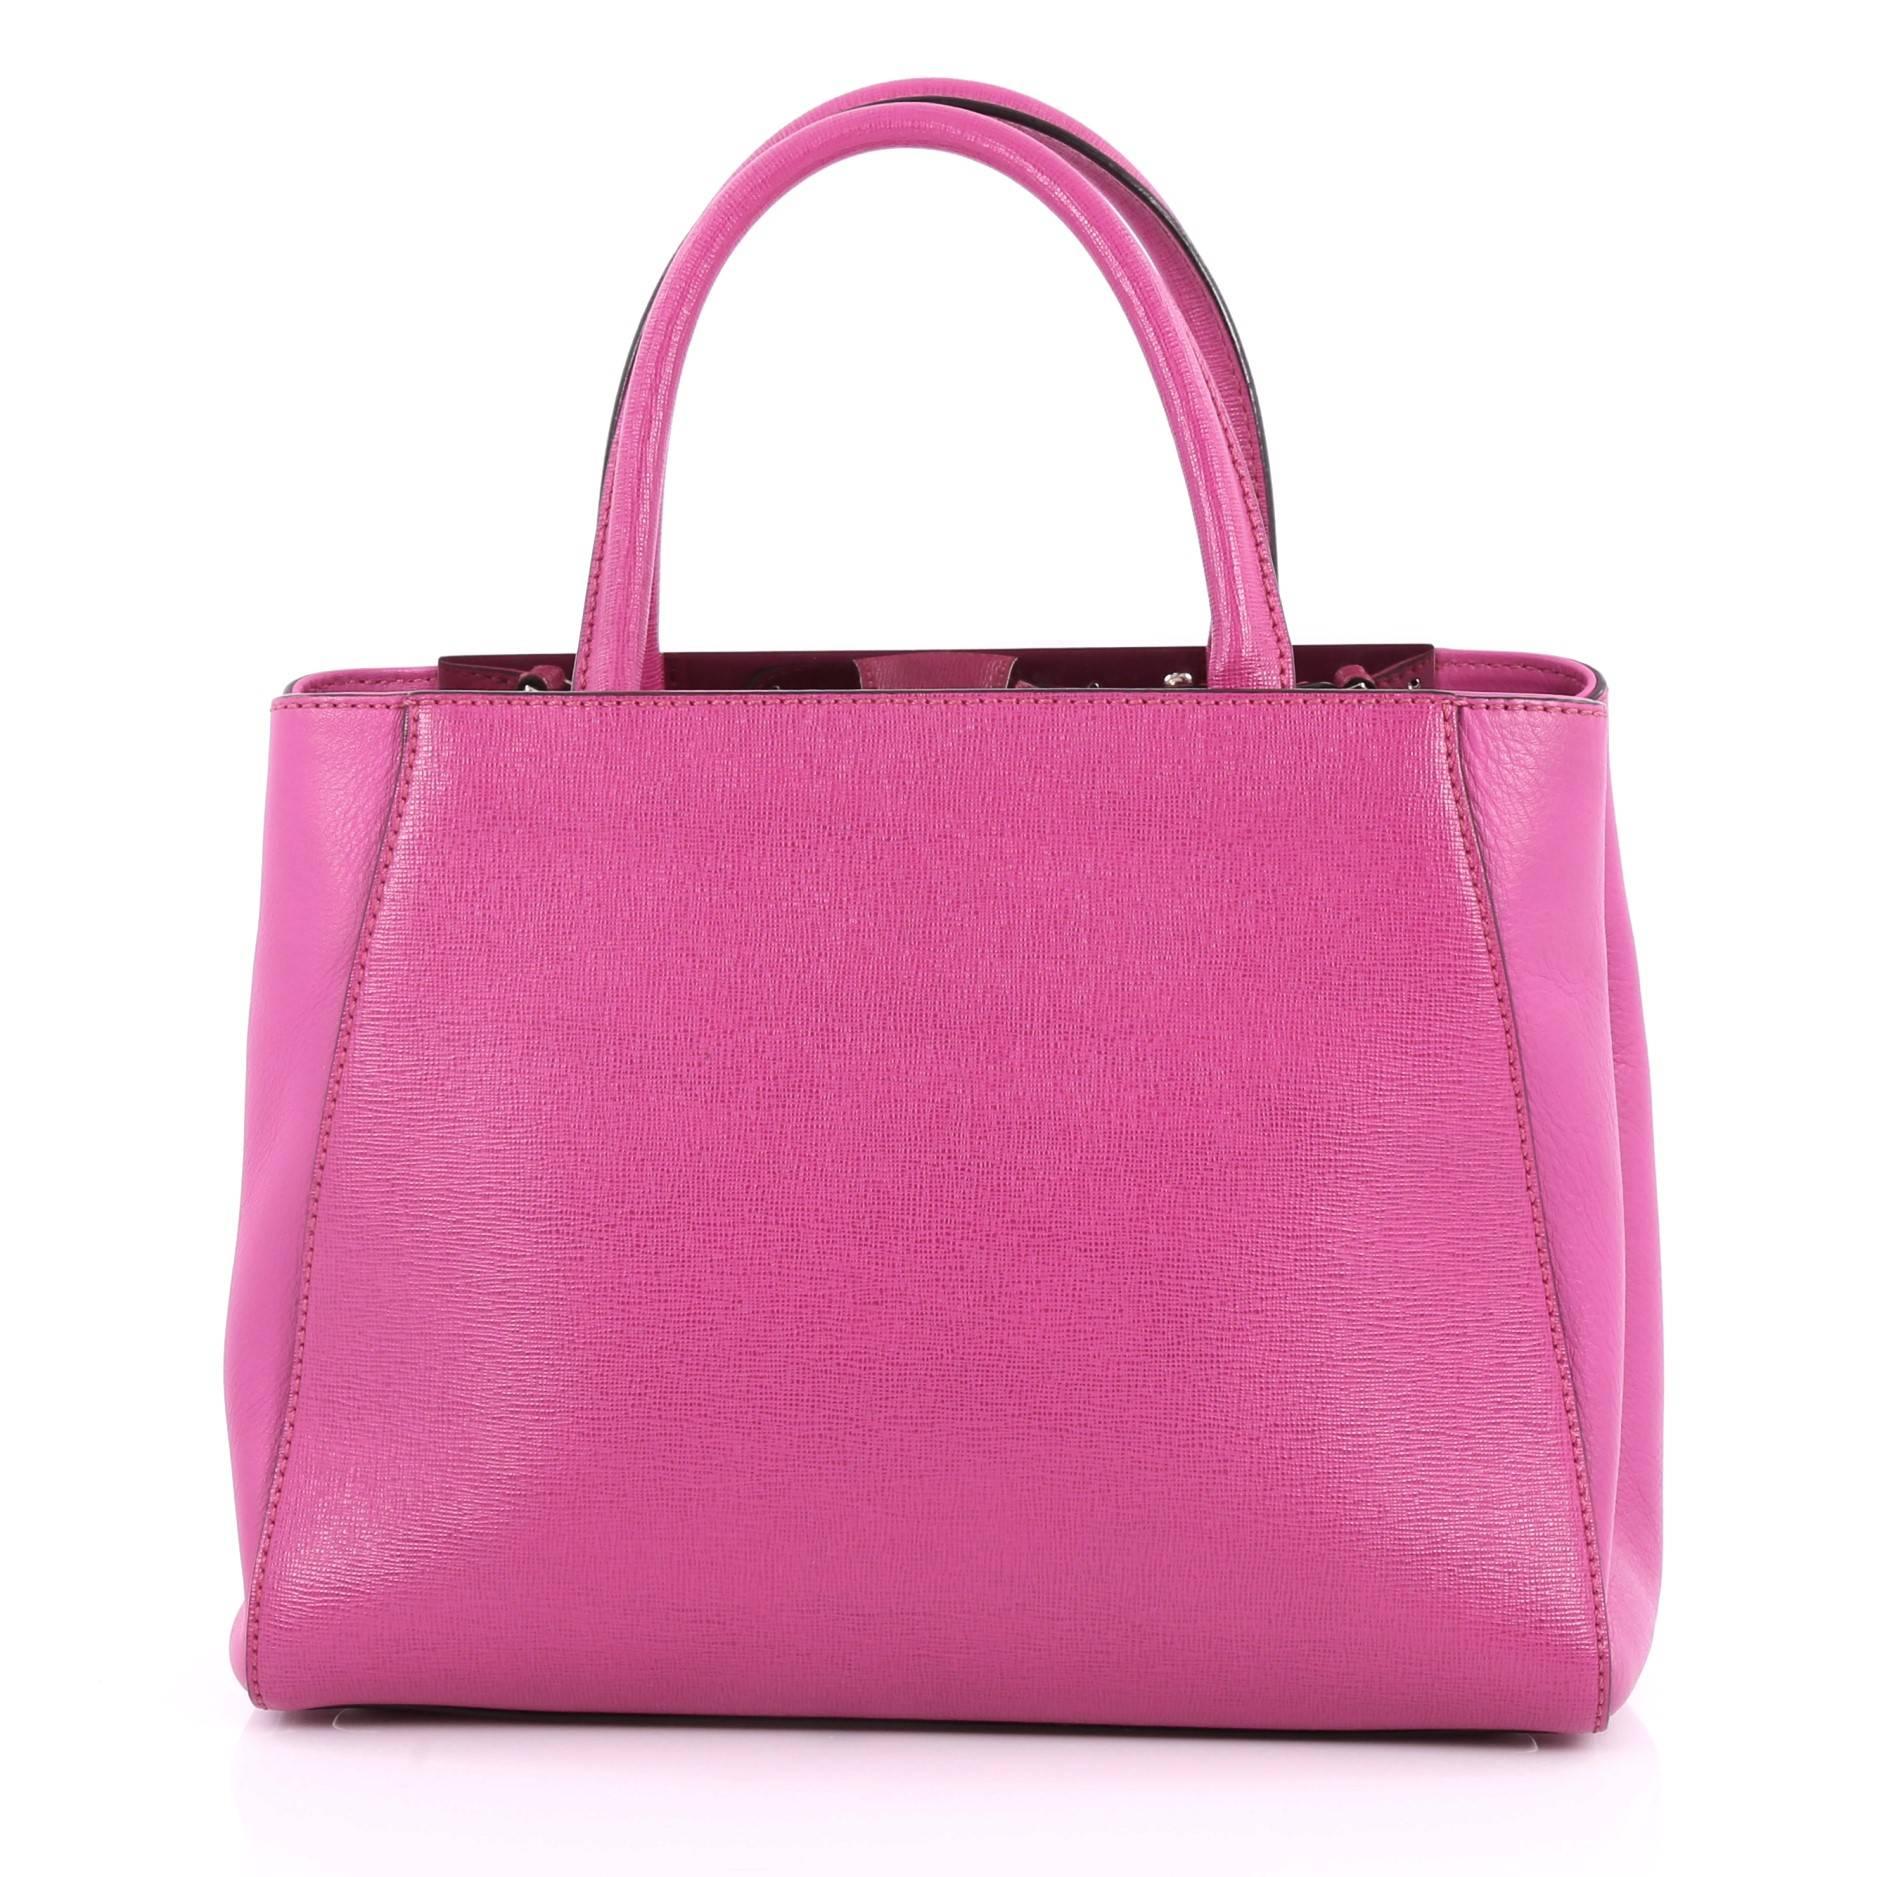 Pink Fendi 2Jours Handbag Leather Petite